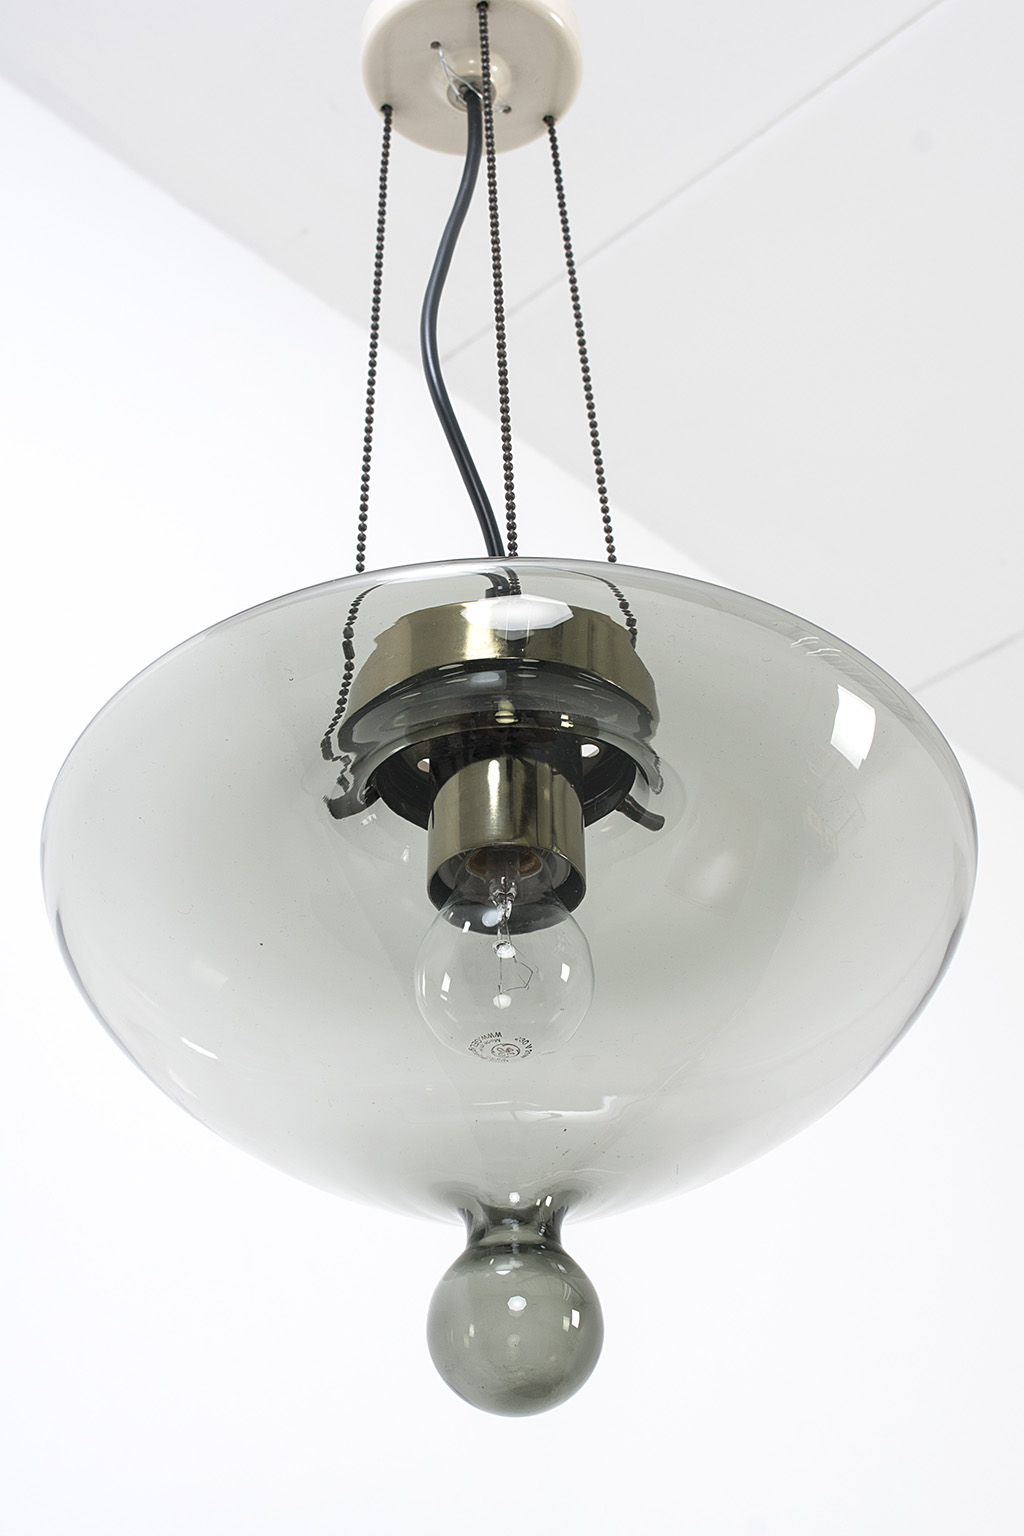 Raak Chaparral hanglamp